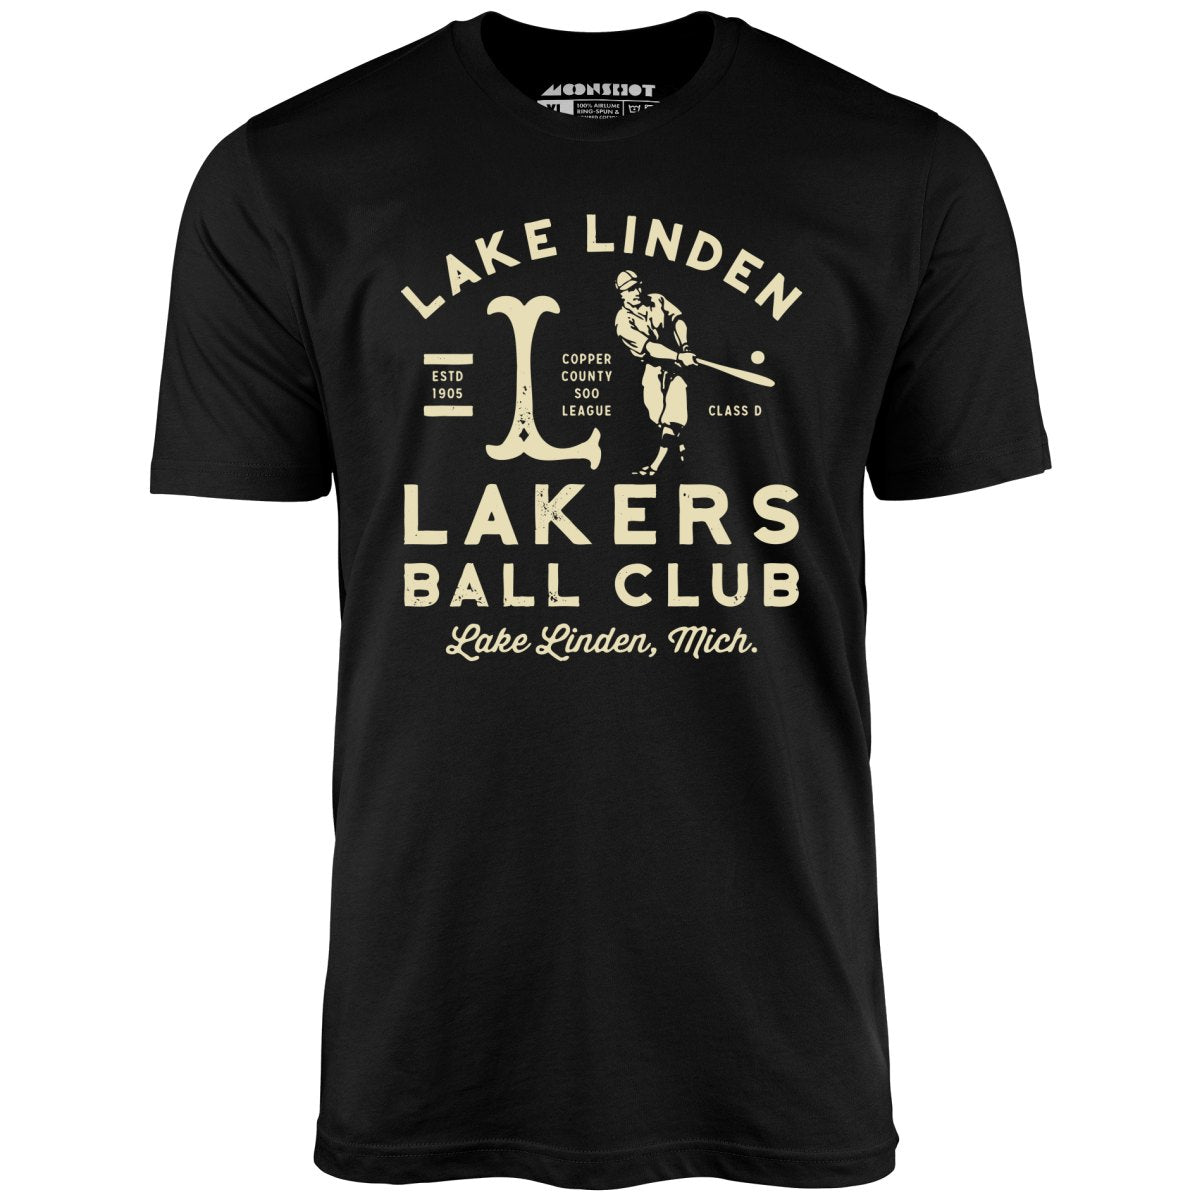 Lake Linden Lakers - Michigan - Vintage Defunct Baseball Teams - Unisex T-Shirt